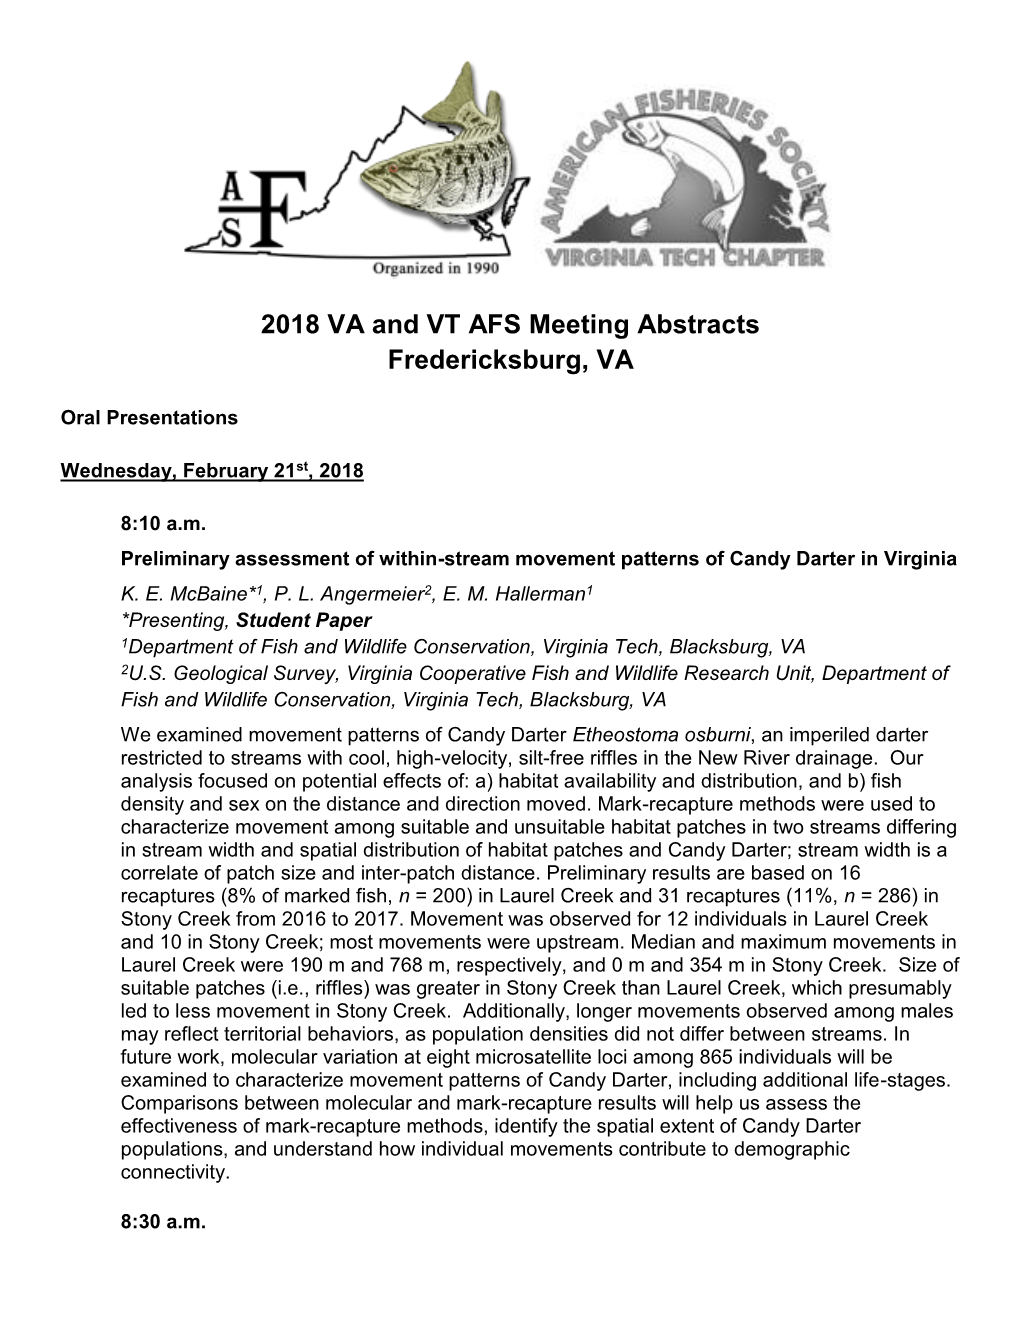 2018 VA and VT AFS Meeting Abstracts Fredericksburg, VA